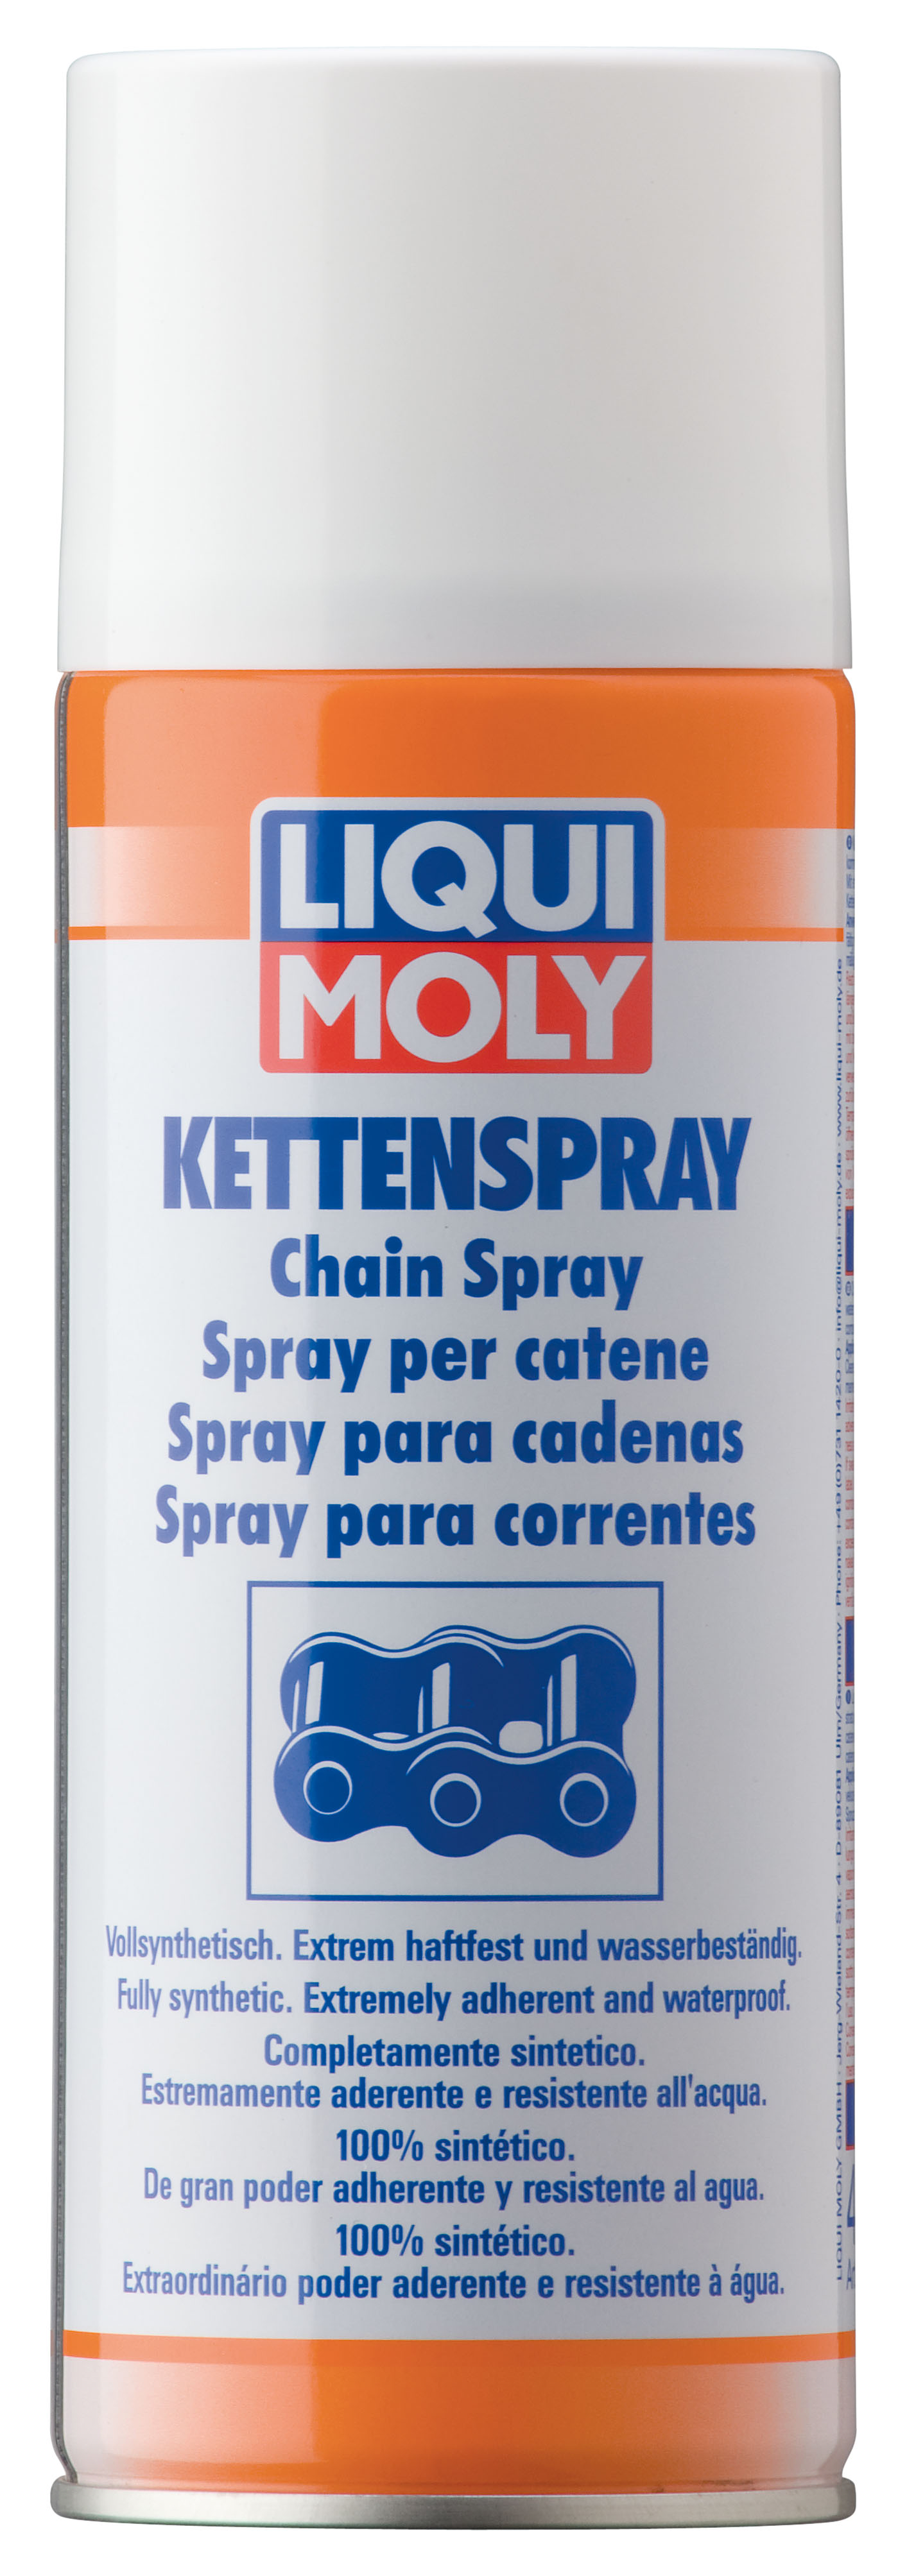 Спрей по уходу за цепями LIQUI MOLY Kettenspray (0,4 кг)